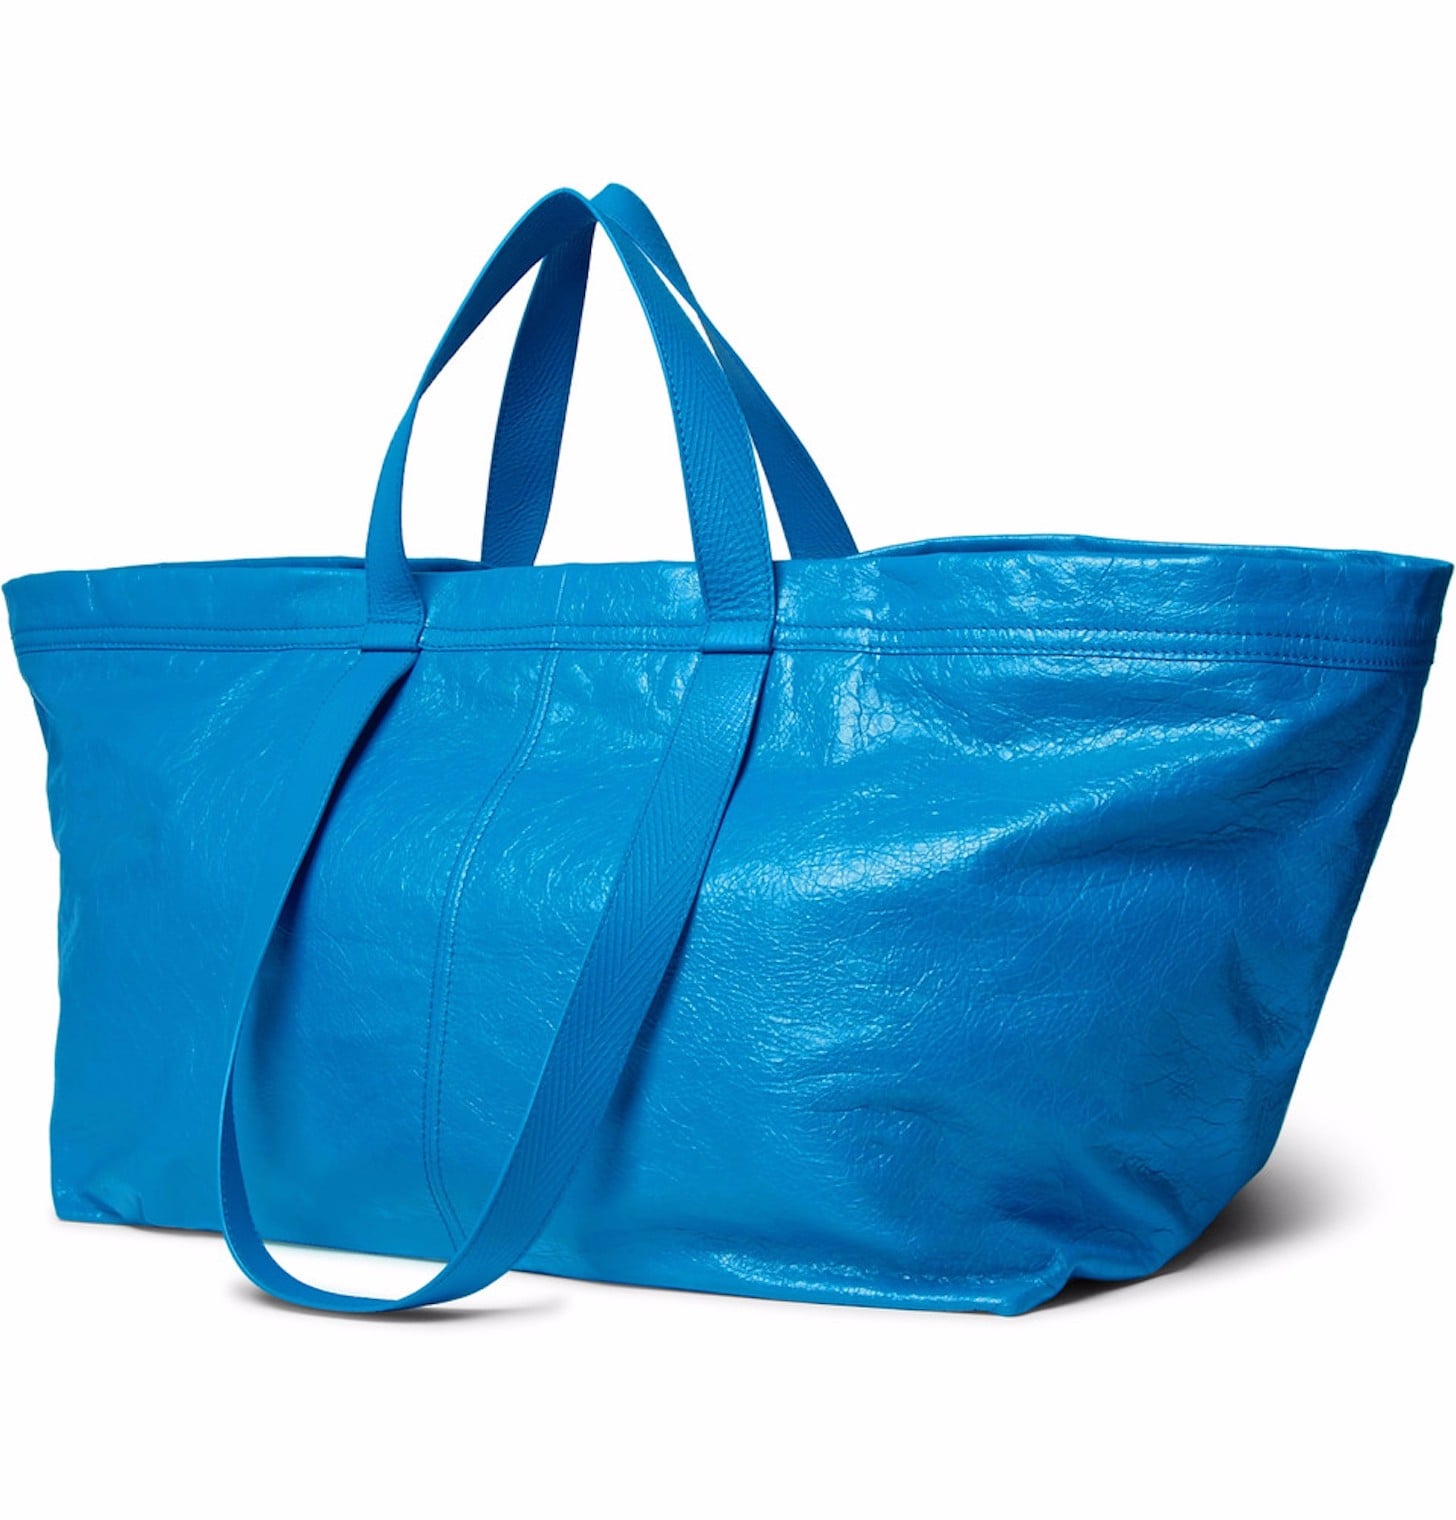 Balenciaga Ikea Bag | POPSUGAR Fashion